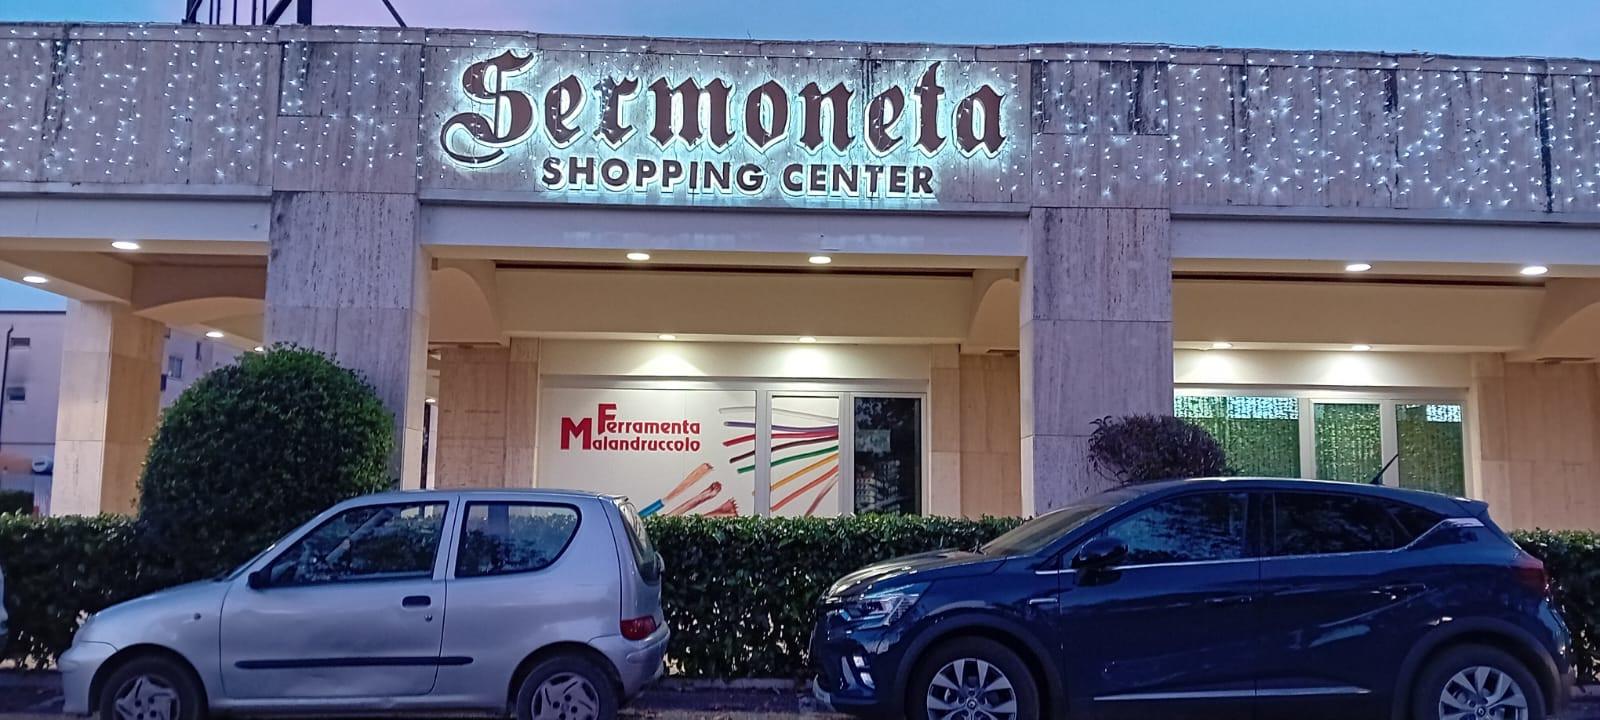 Conversione da Neon a Led Latina, C.C. Sermoneta Shopping Center